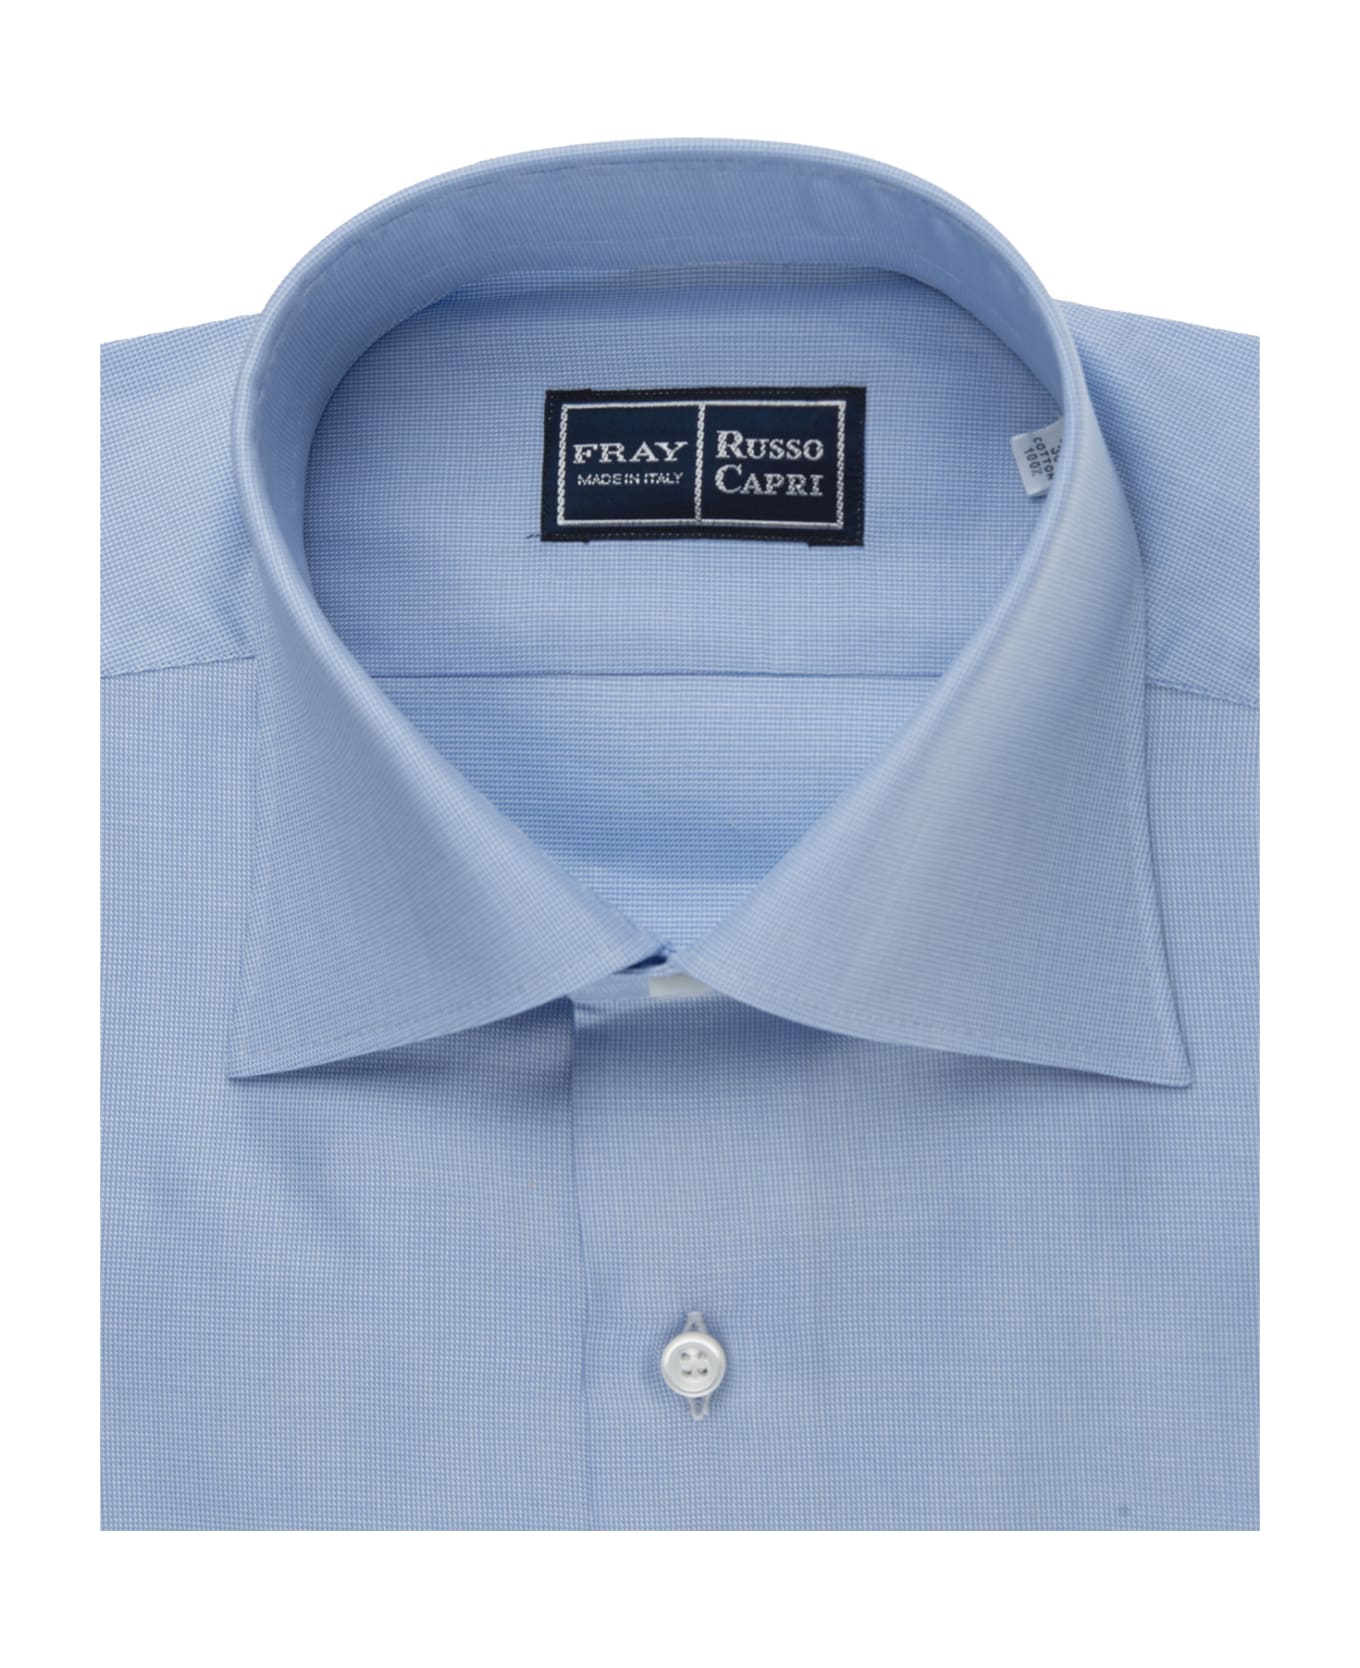 Fray Regular Fit Shirt In Light Blue Oxford Cotton - Blue